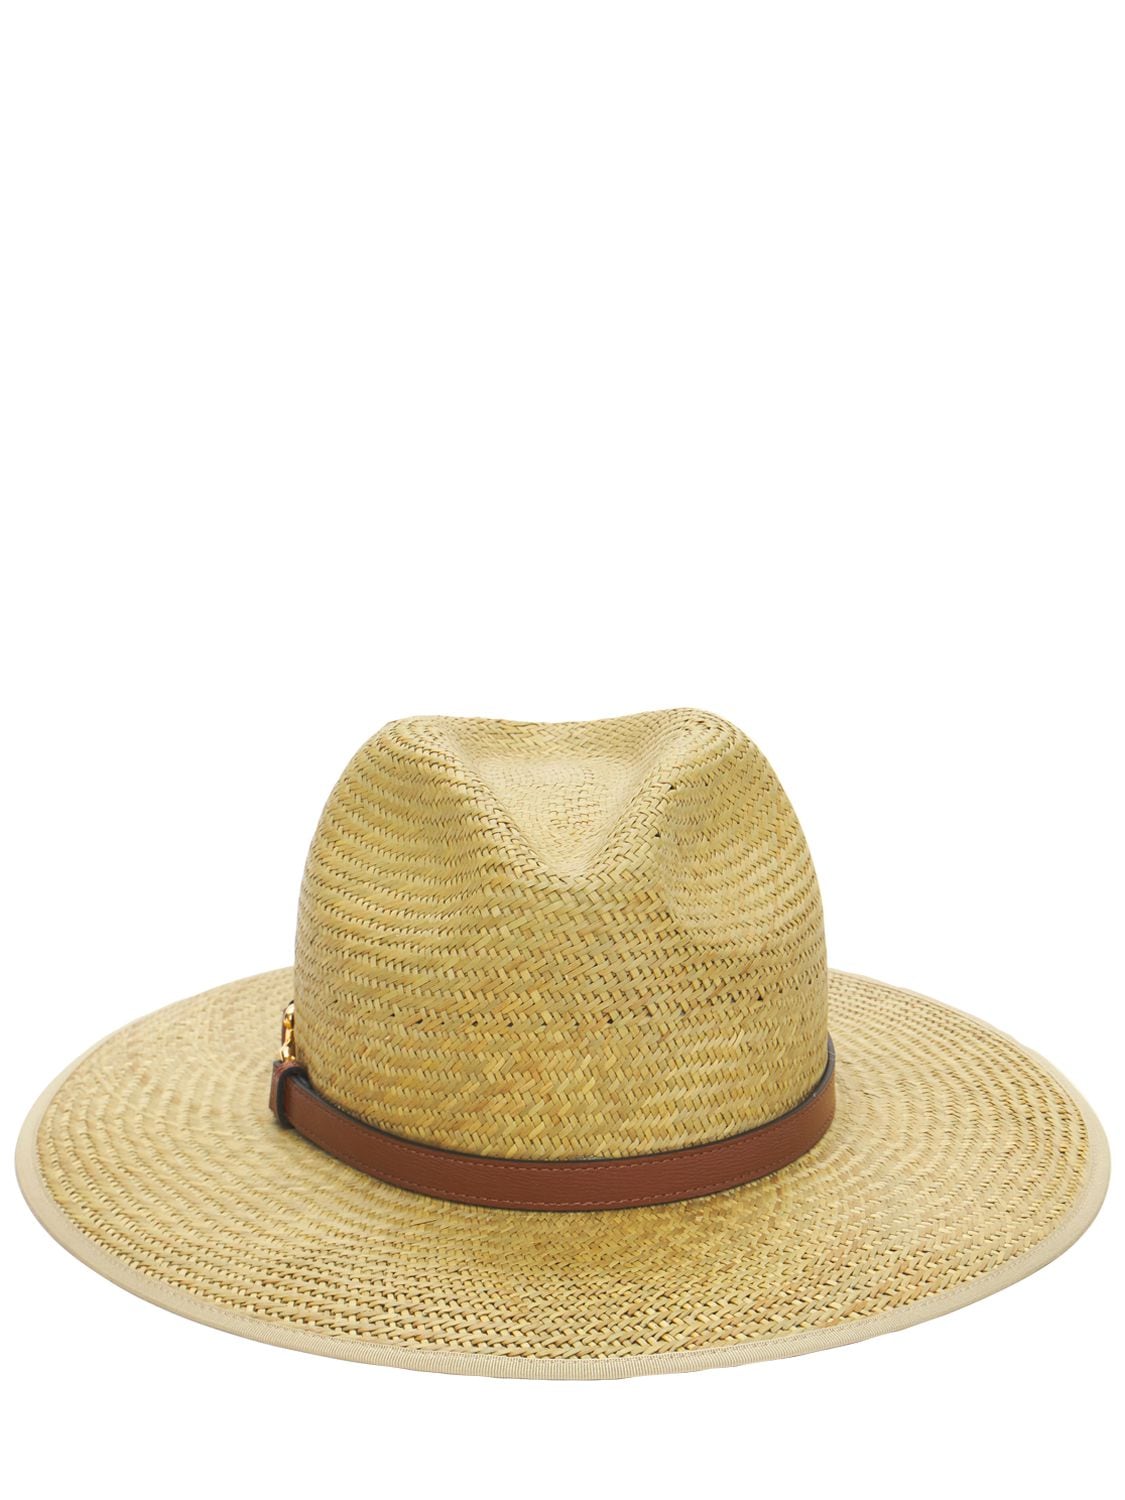 Image of Straw Brimmed Hat W/horsebit